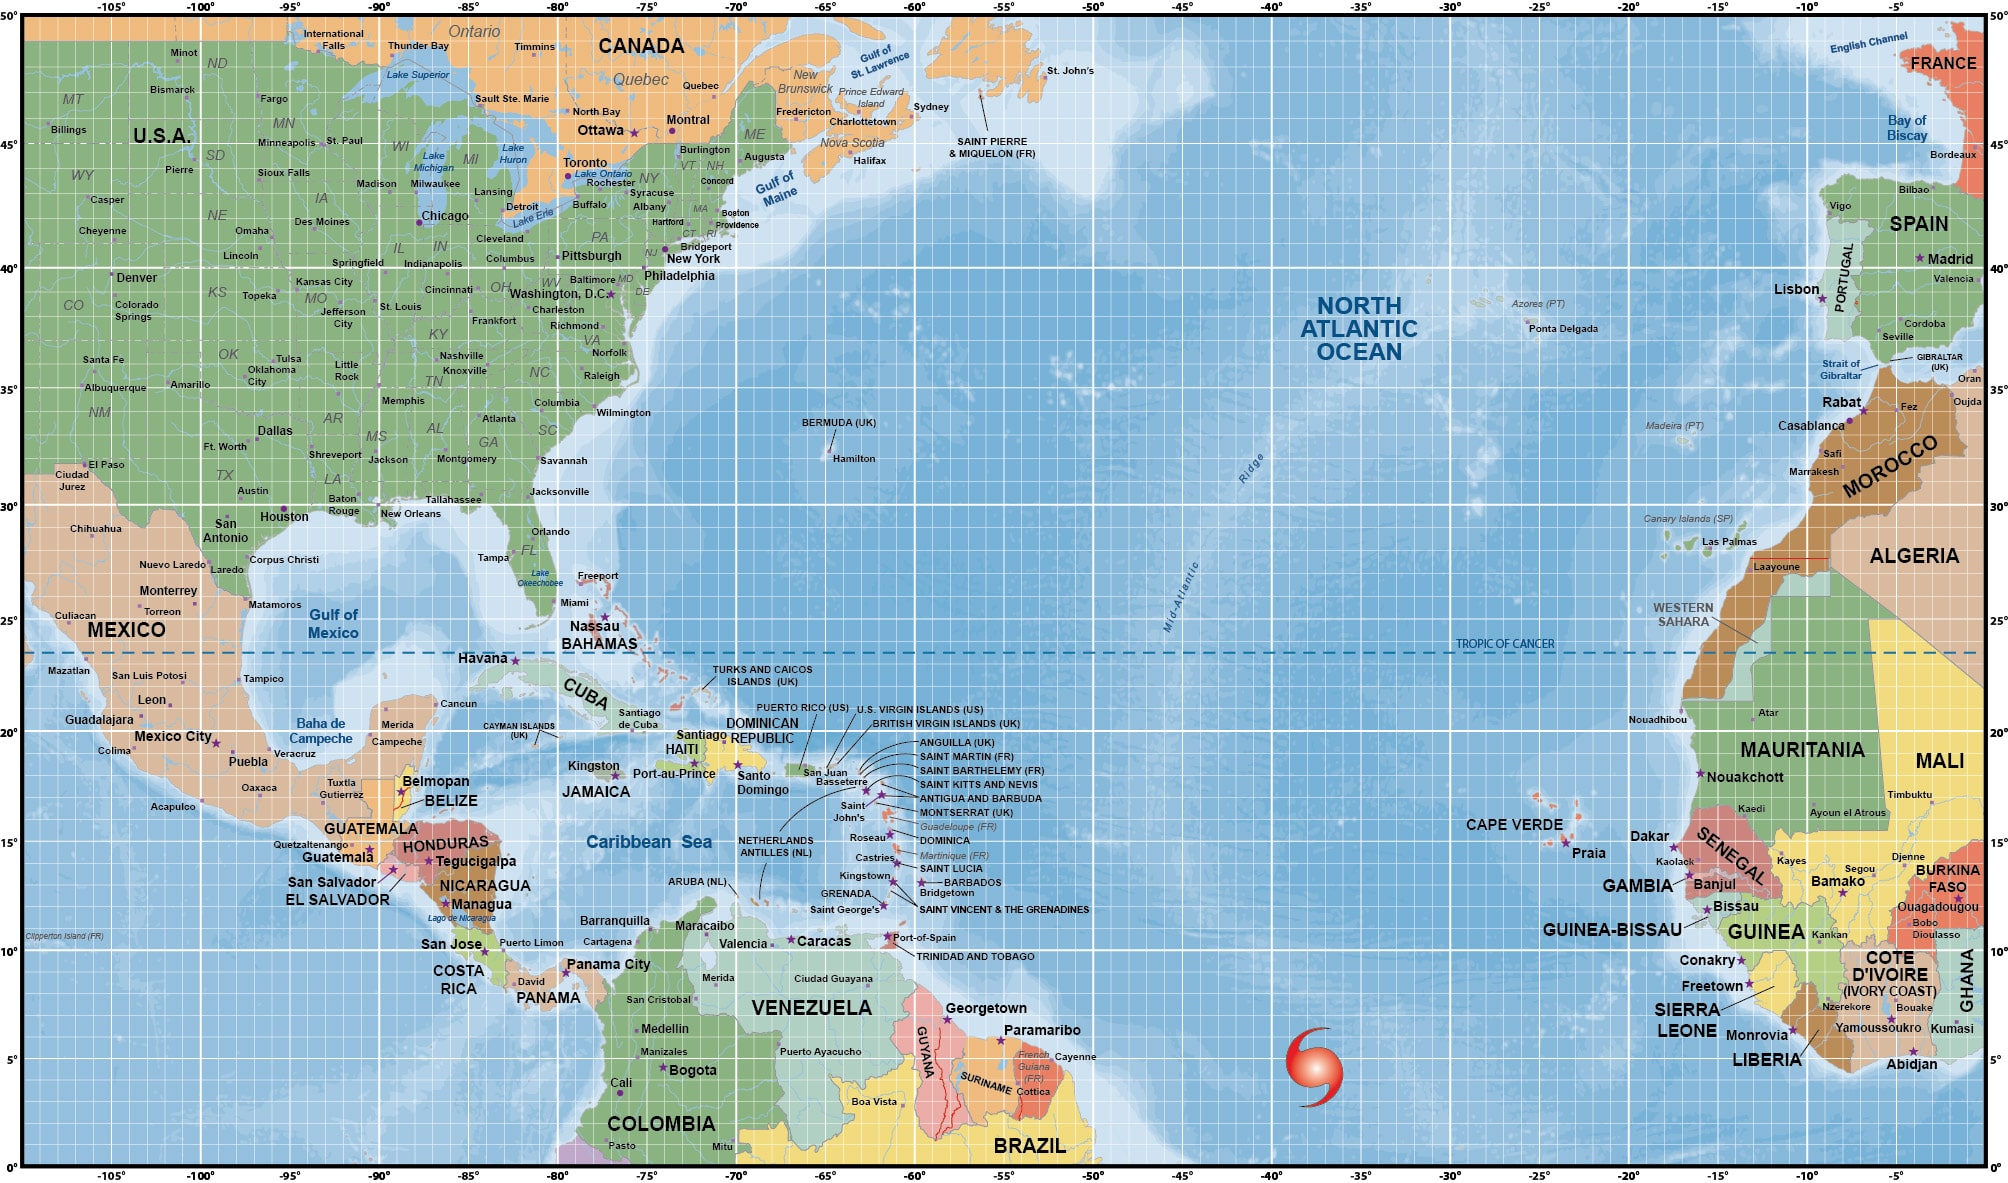 Atlantic Ocean Coastline Map 